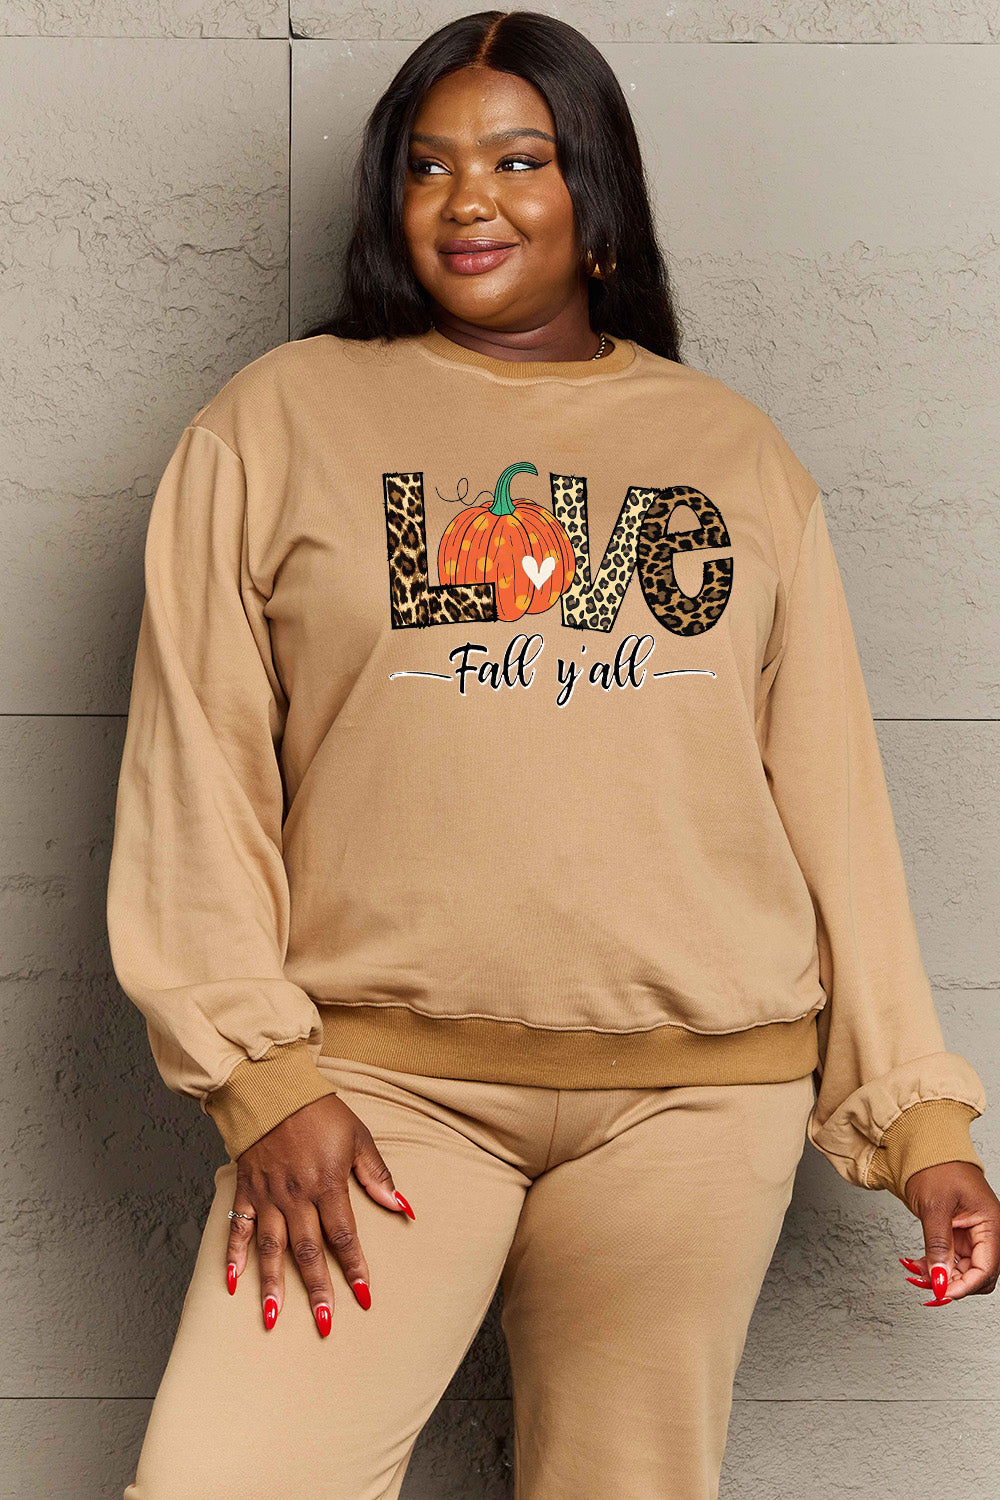 I LOVE FALL Y'ALL Graphic Sweatshirt